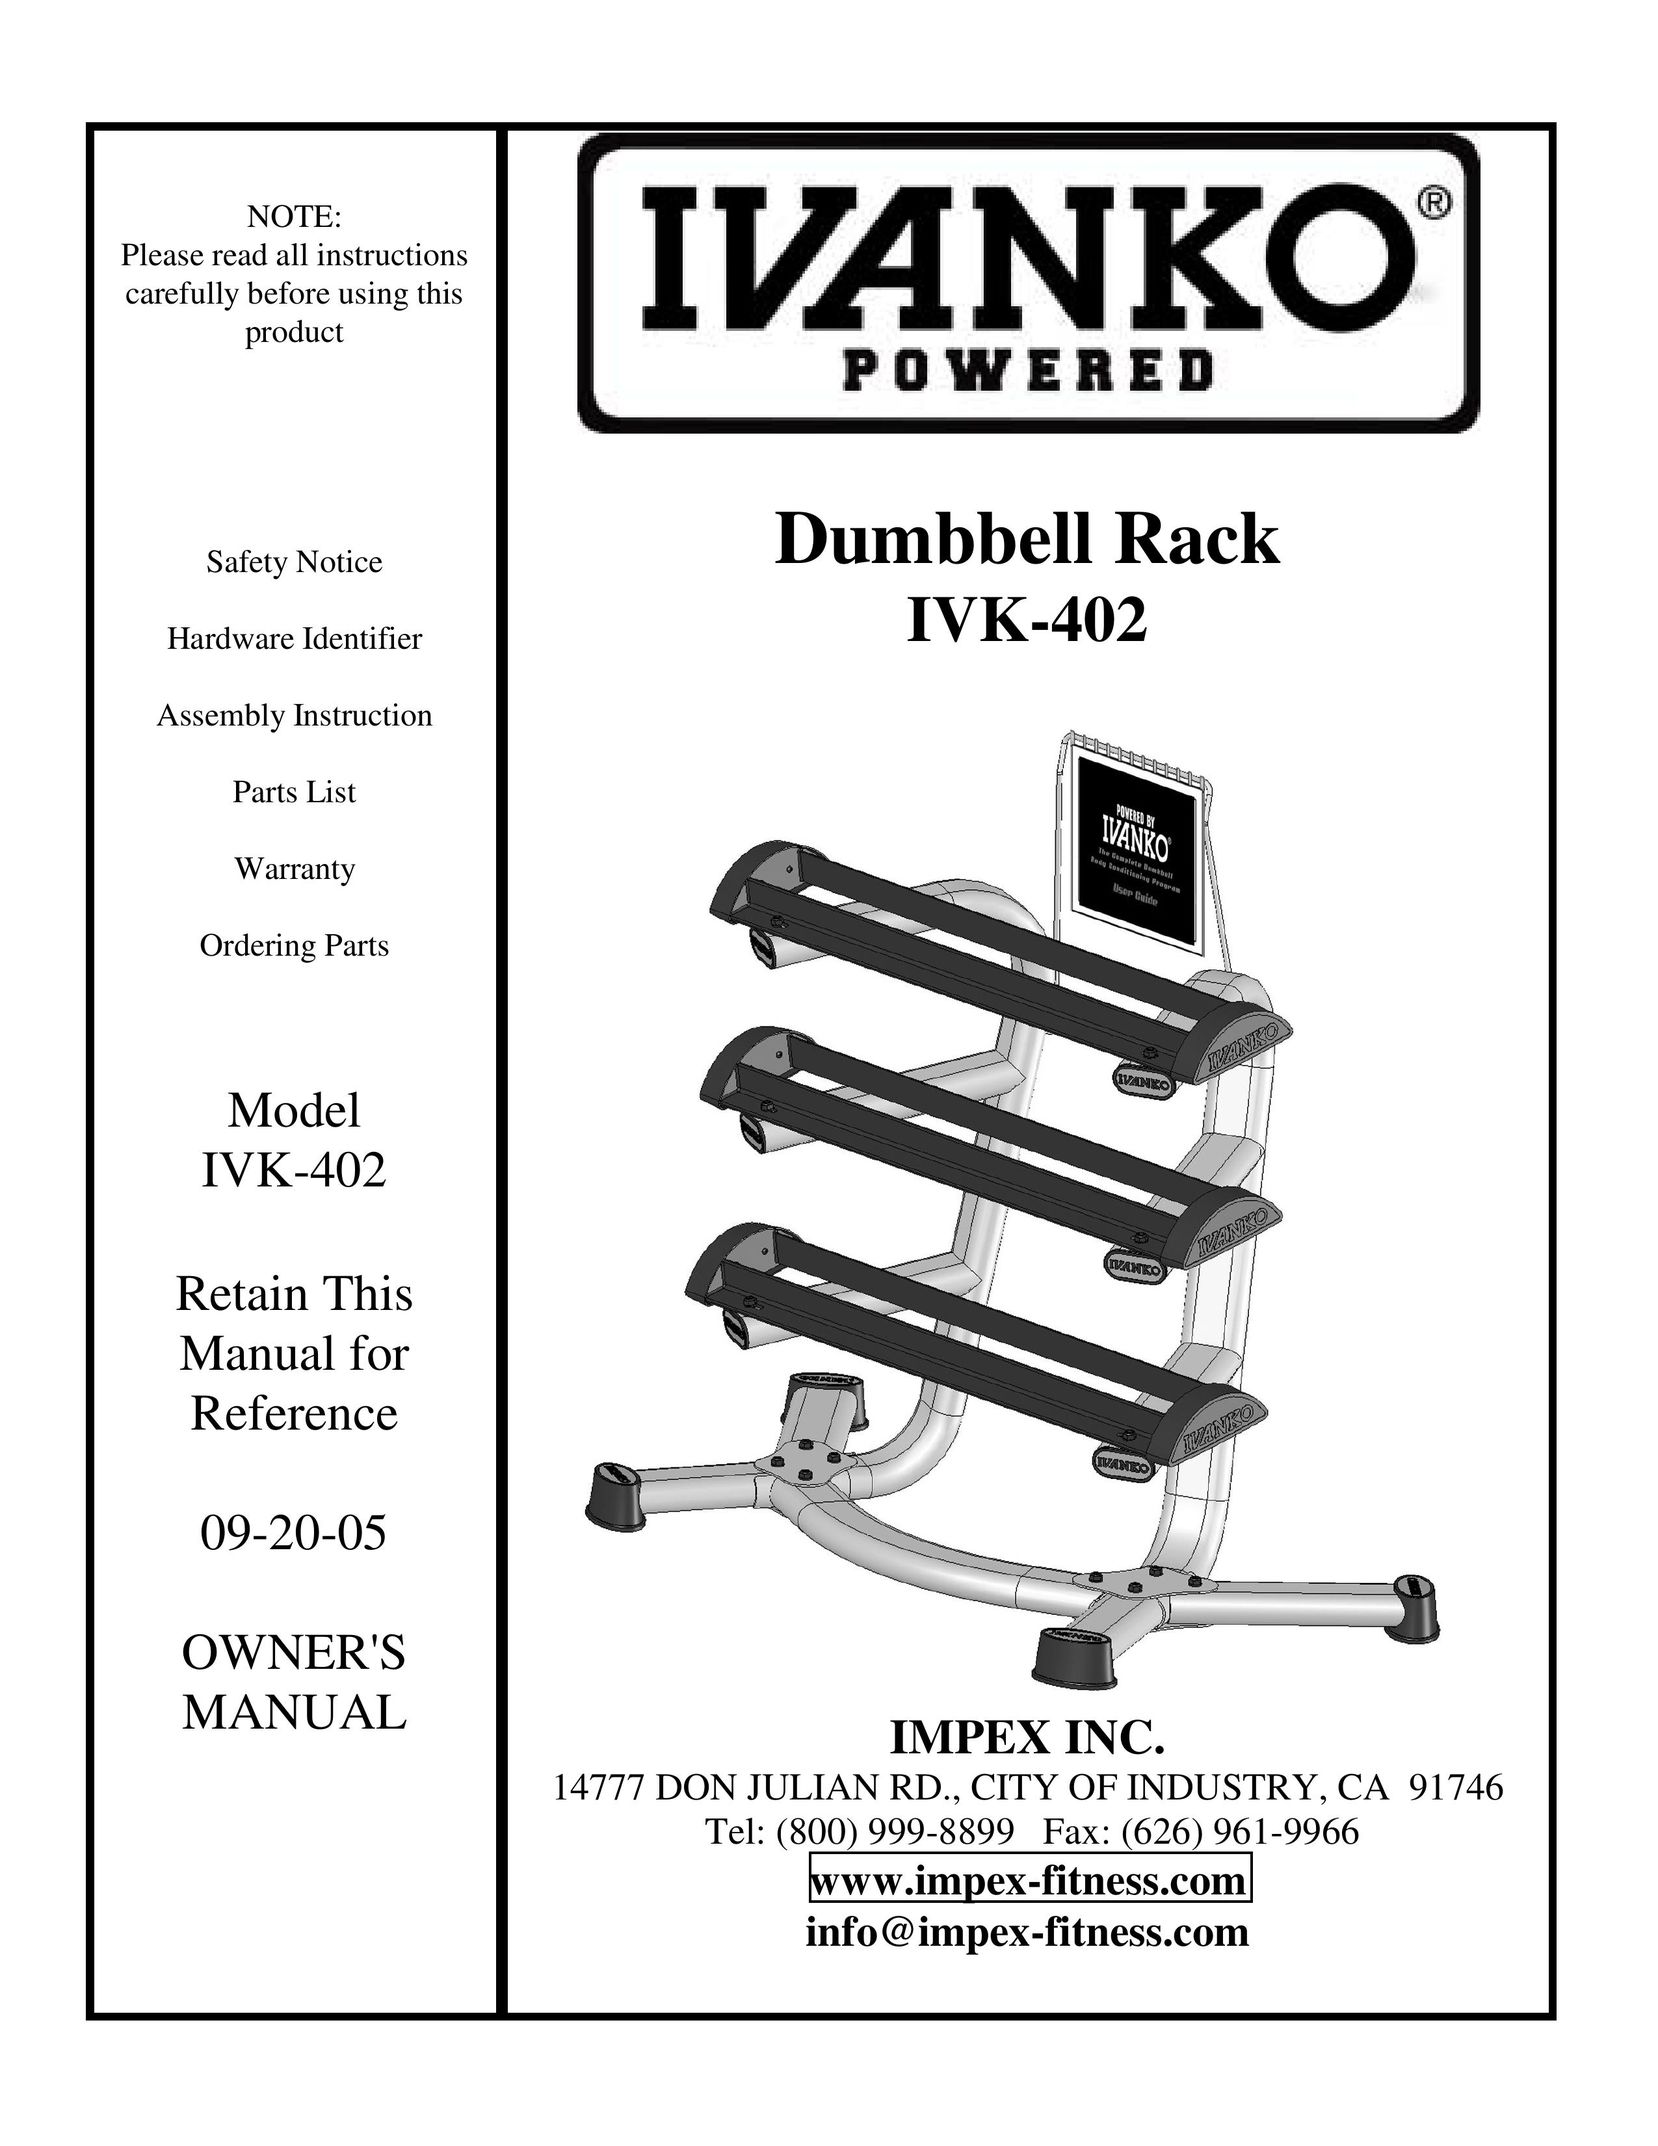 Impex IVK-402 Home Gym User Manual